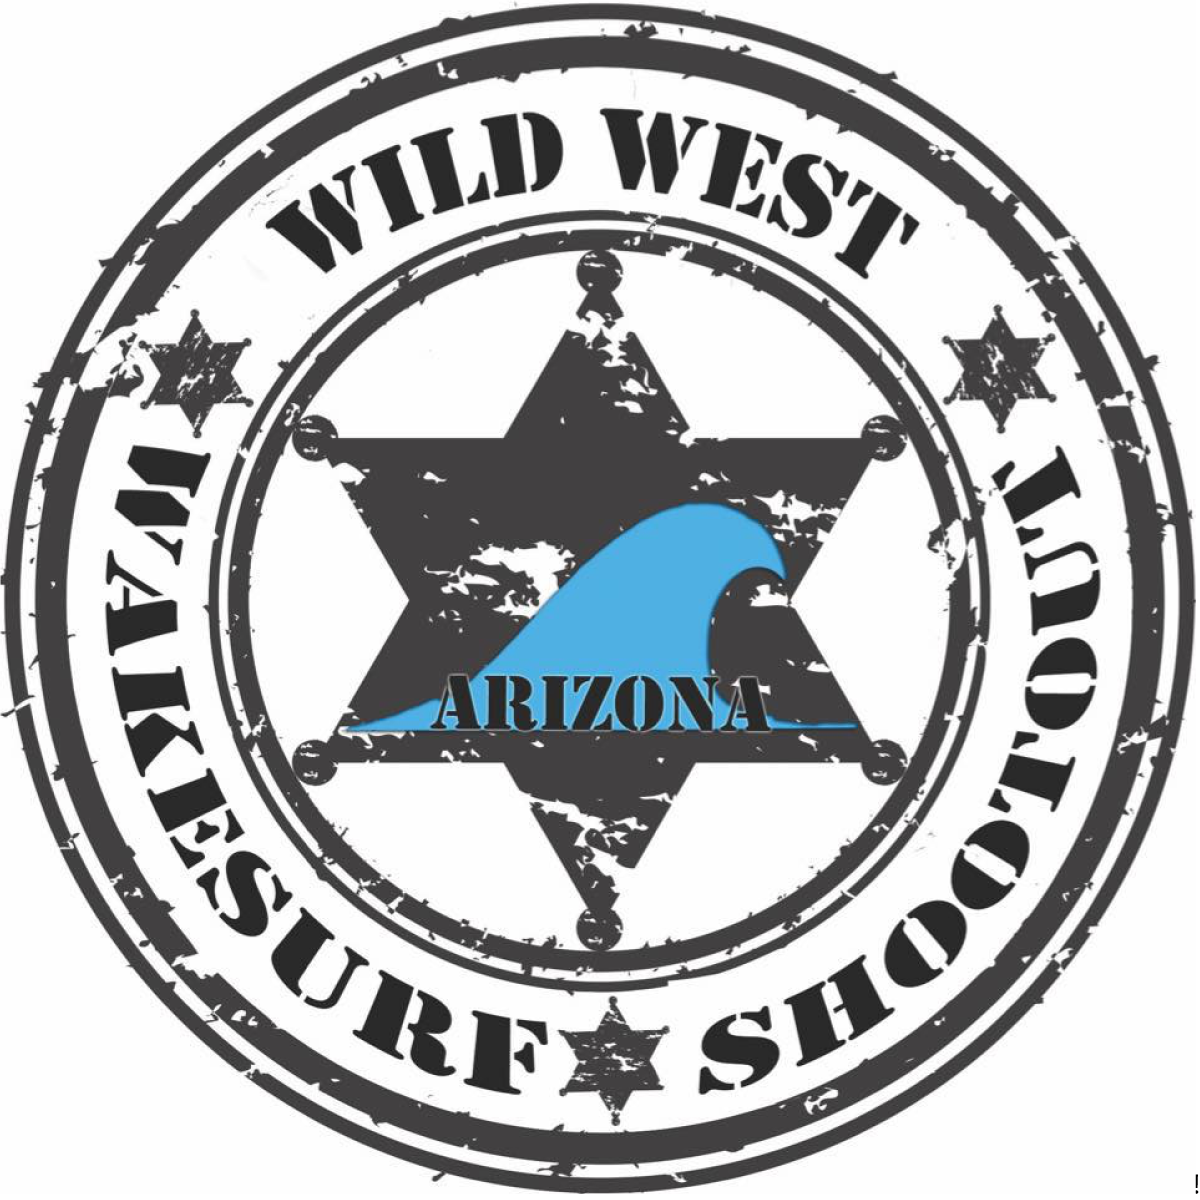 Wild west surf shootout logo.